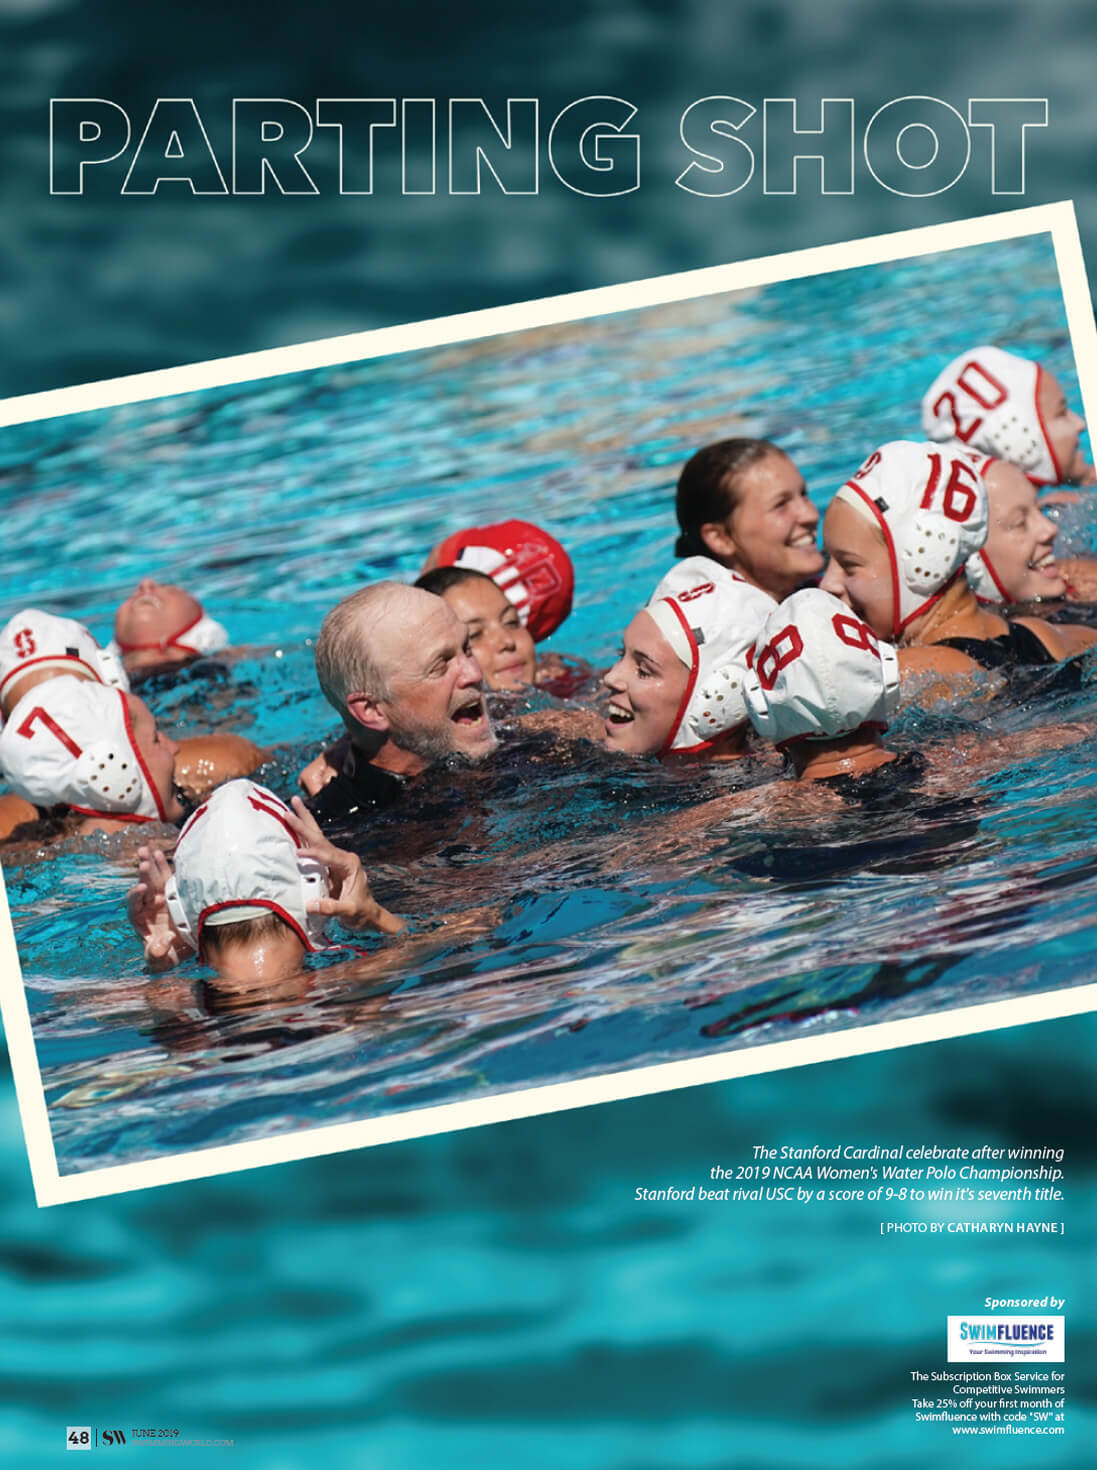 Swimming World Magazine - Parting Shot June 2019 - The Stanford Cardinals